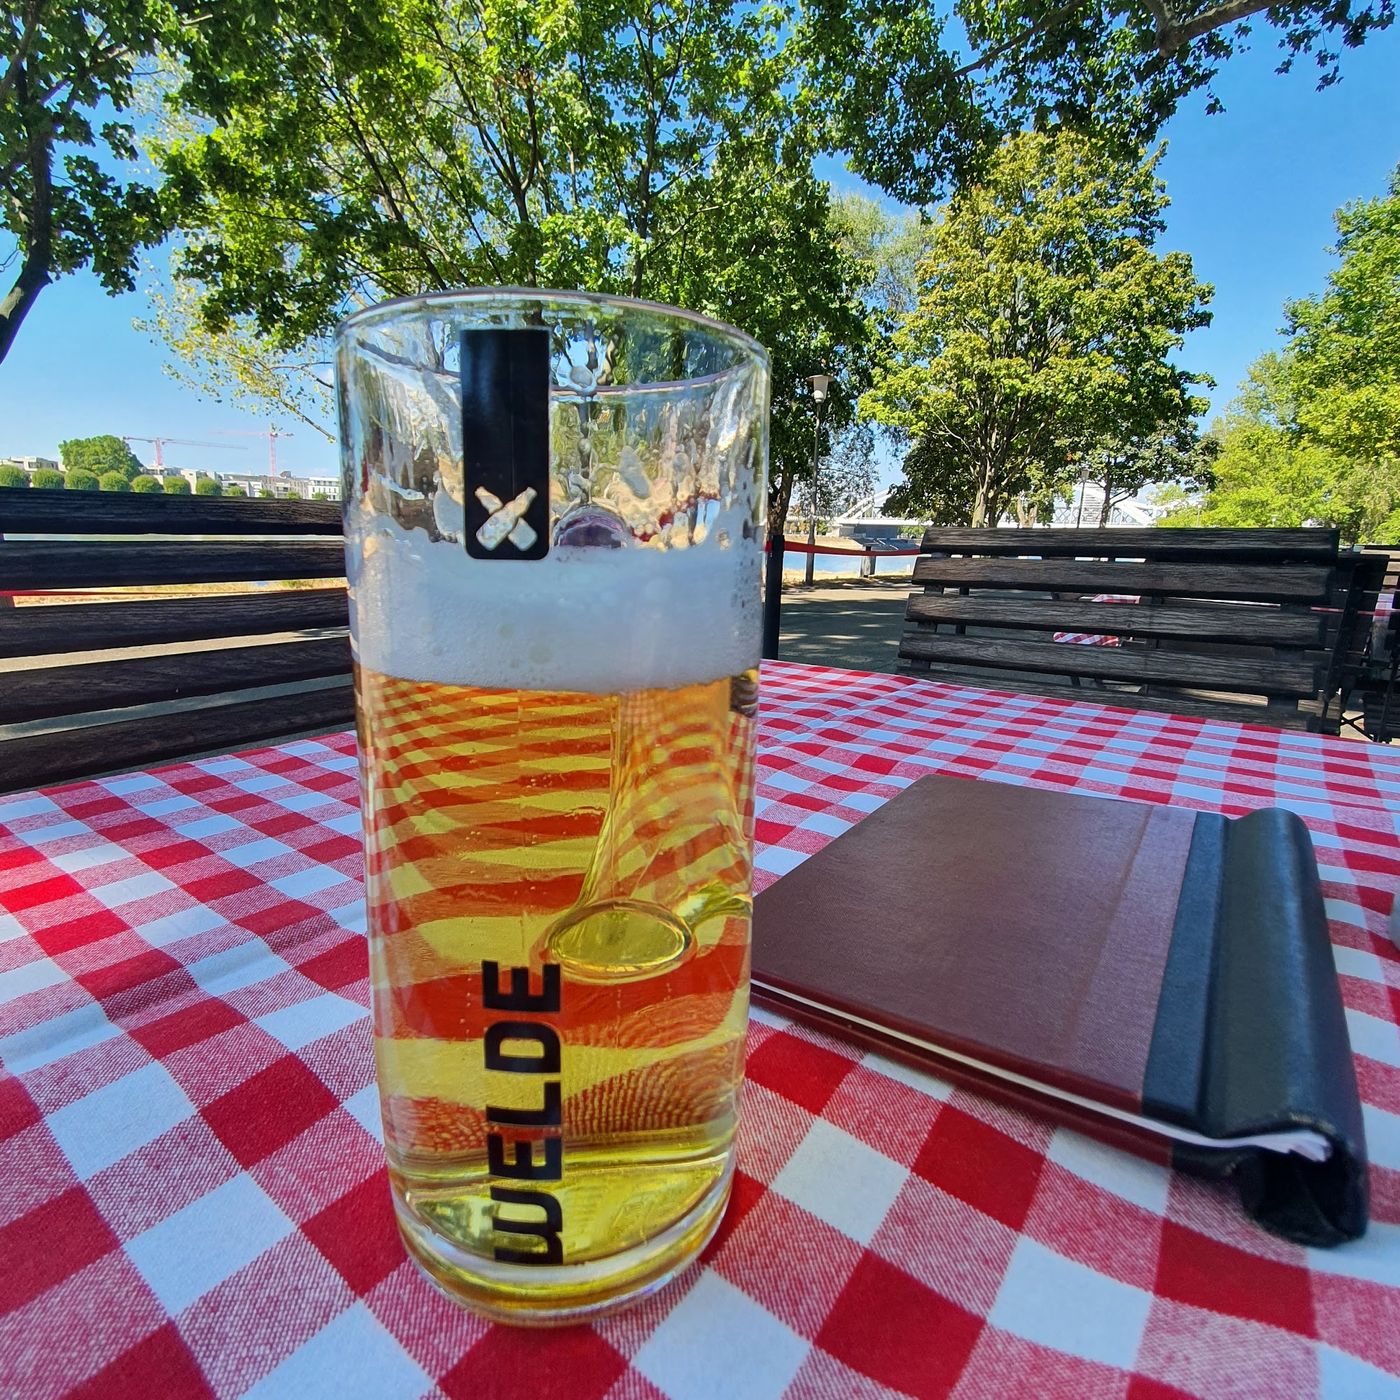 Biergarten mit Rheinblick